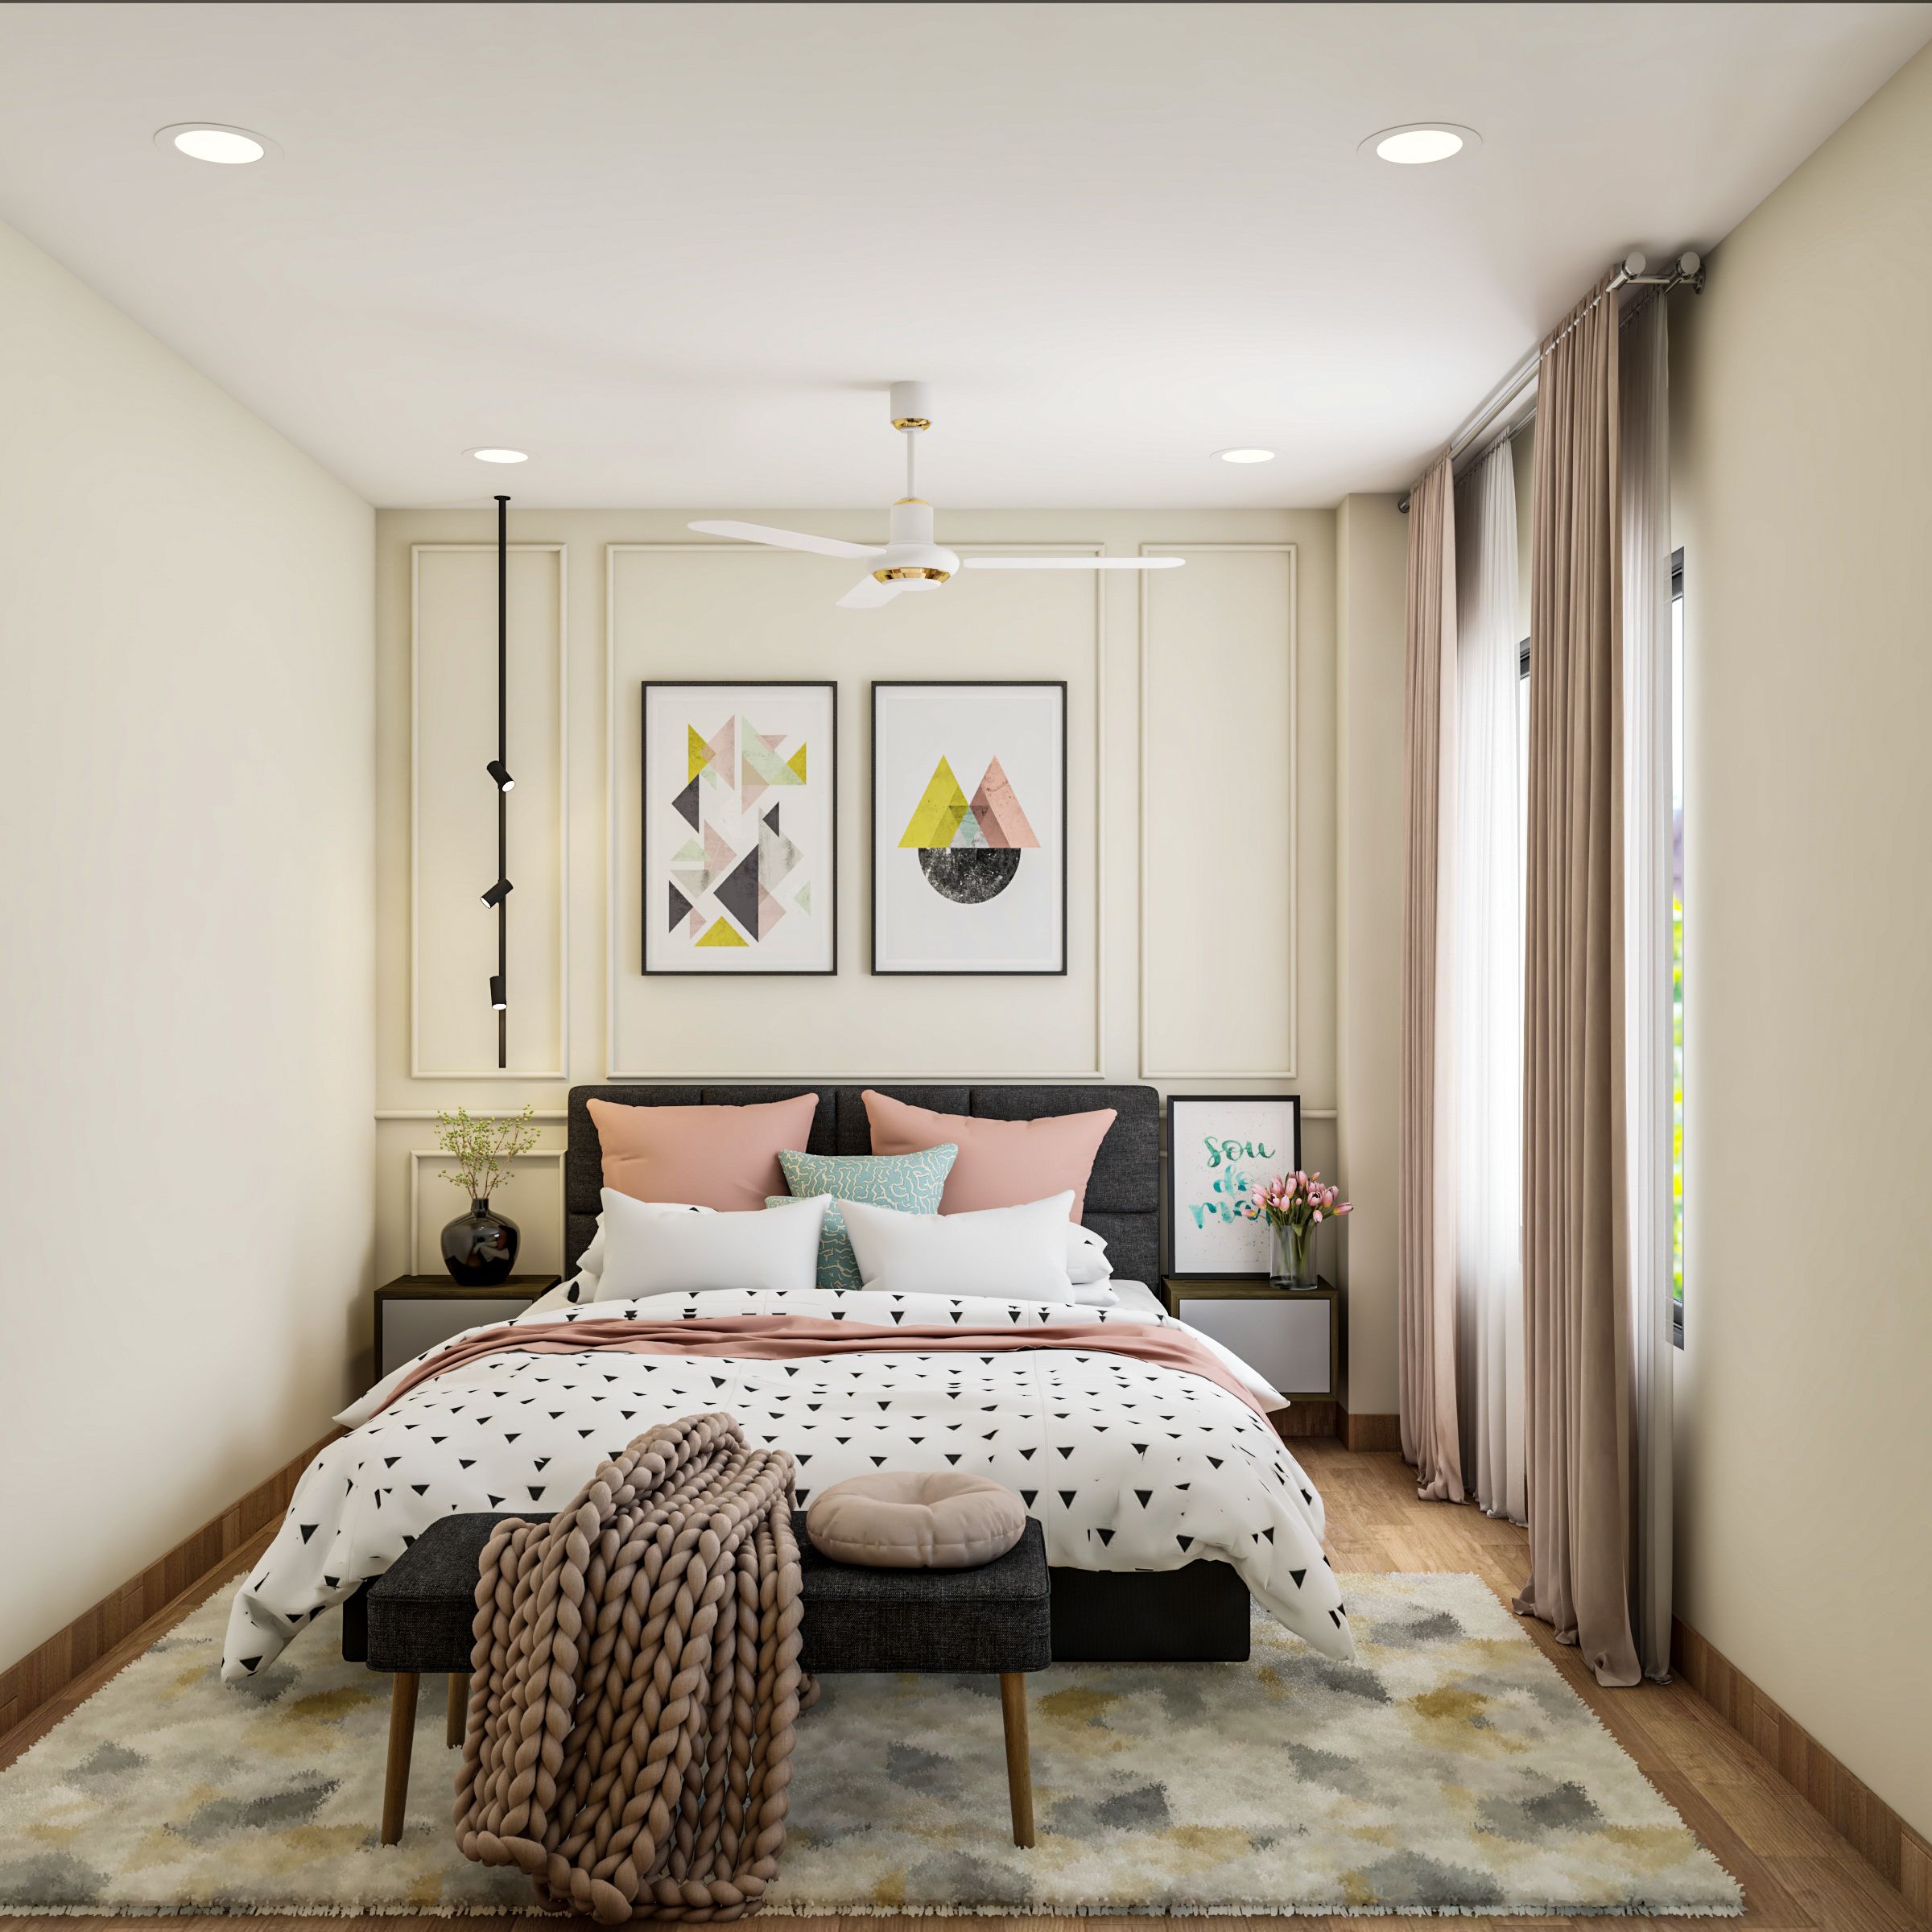 Bedroom Design | HDB Bedroom Design Ideas in Singapore - Livspace